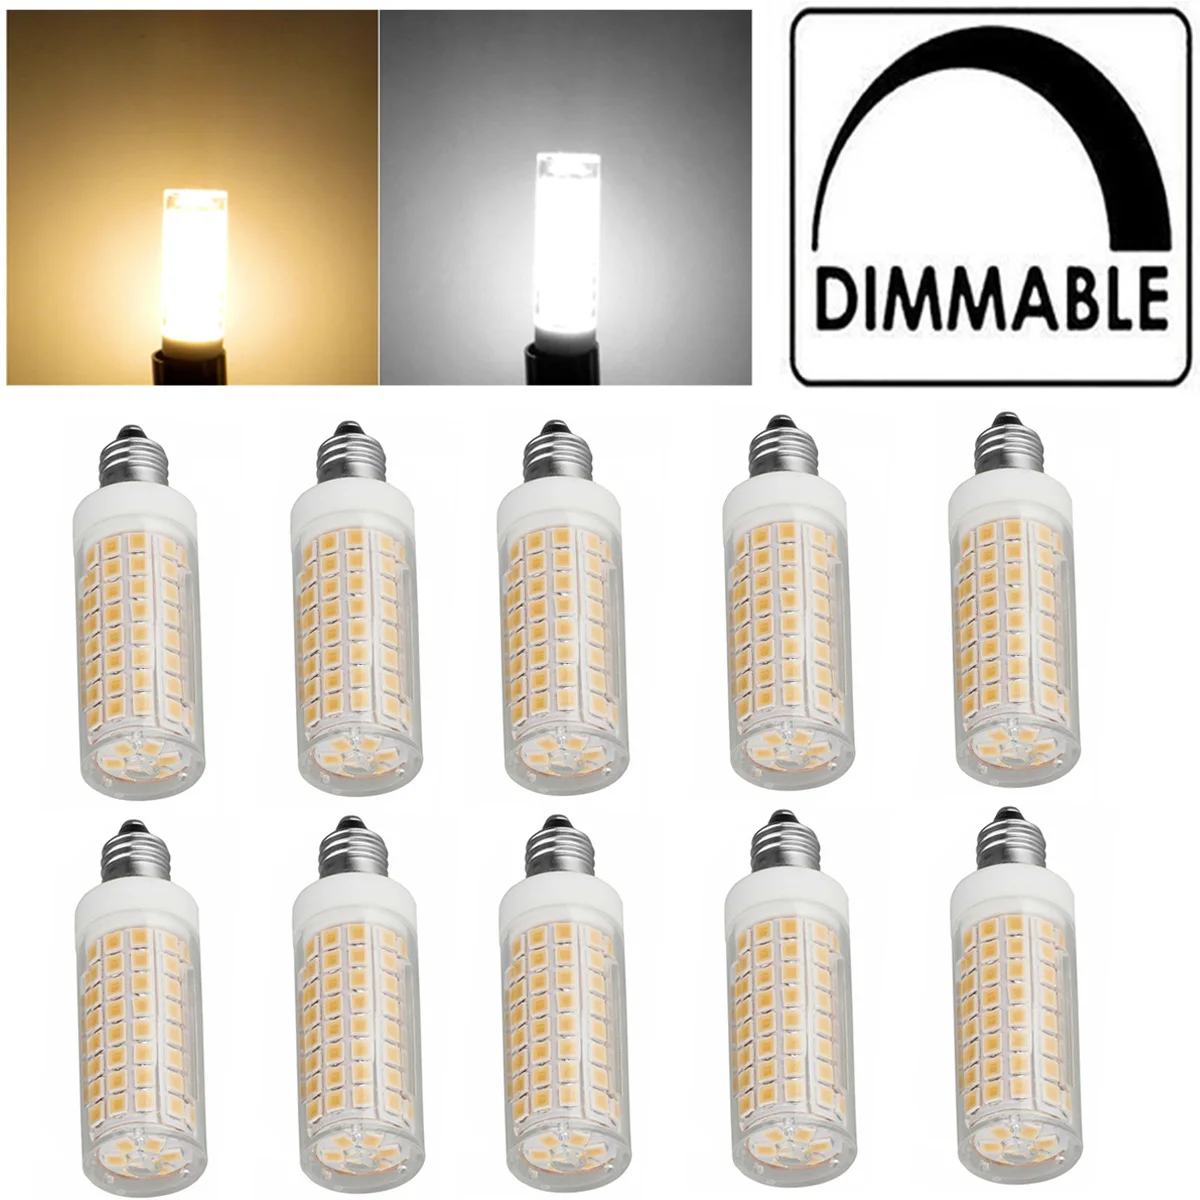 

5Pcs Dimmable E11 E12 Socket Base Mini LED Corn Light Bulbs 9W Candelabra Base Replace 80W Halogen Lamp 220V 110V Energy Saving